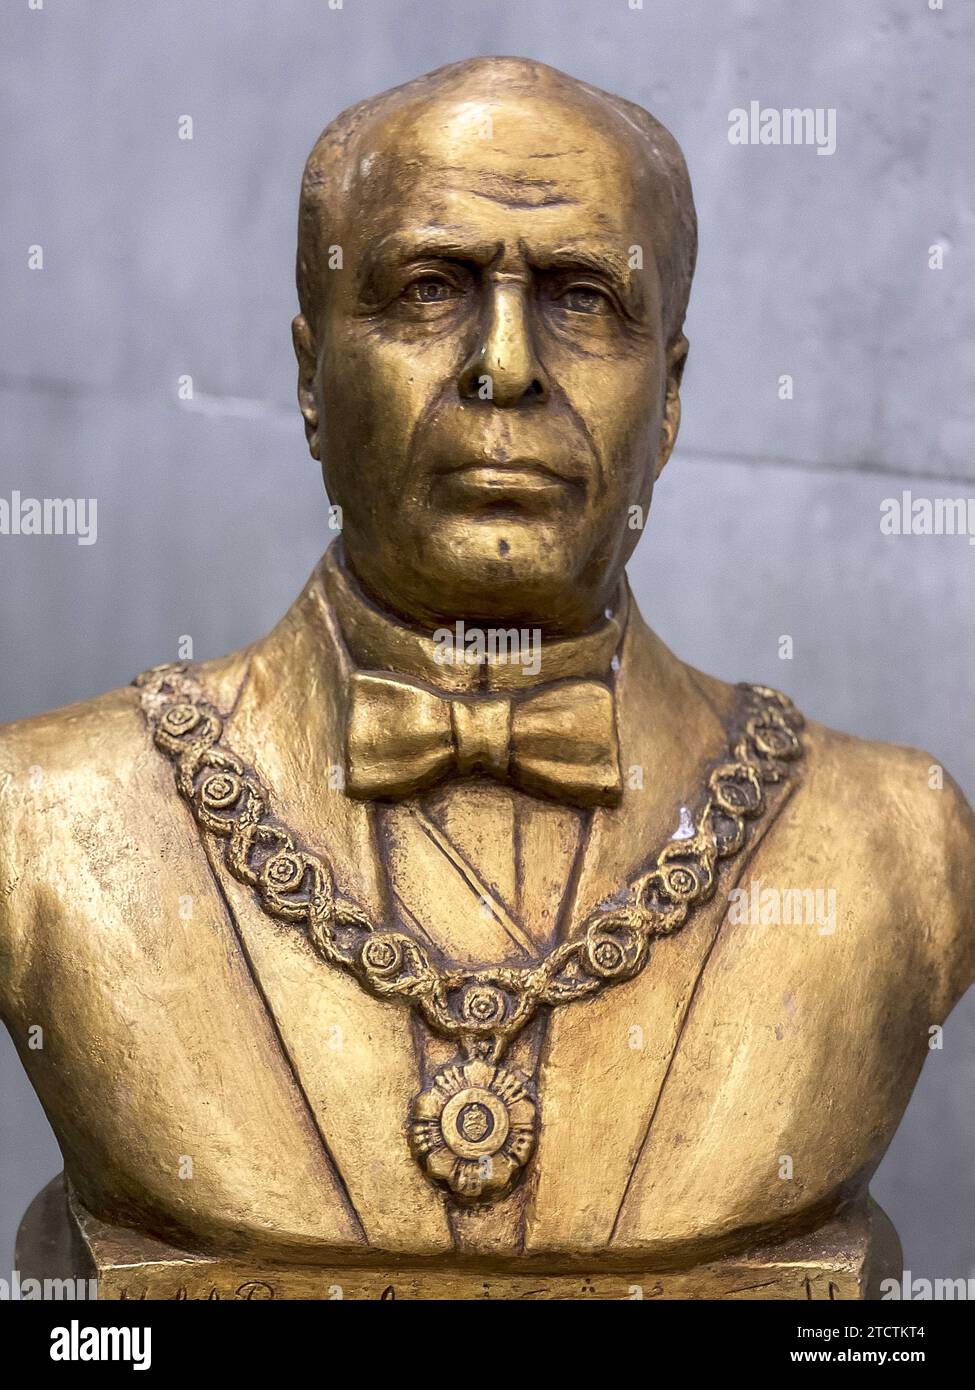 Habib Bourguiba statue in Paris, France Stock Photo